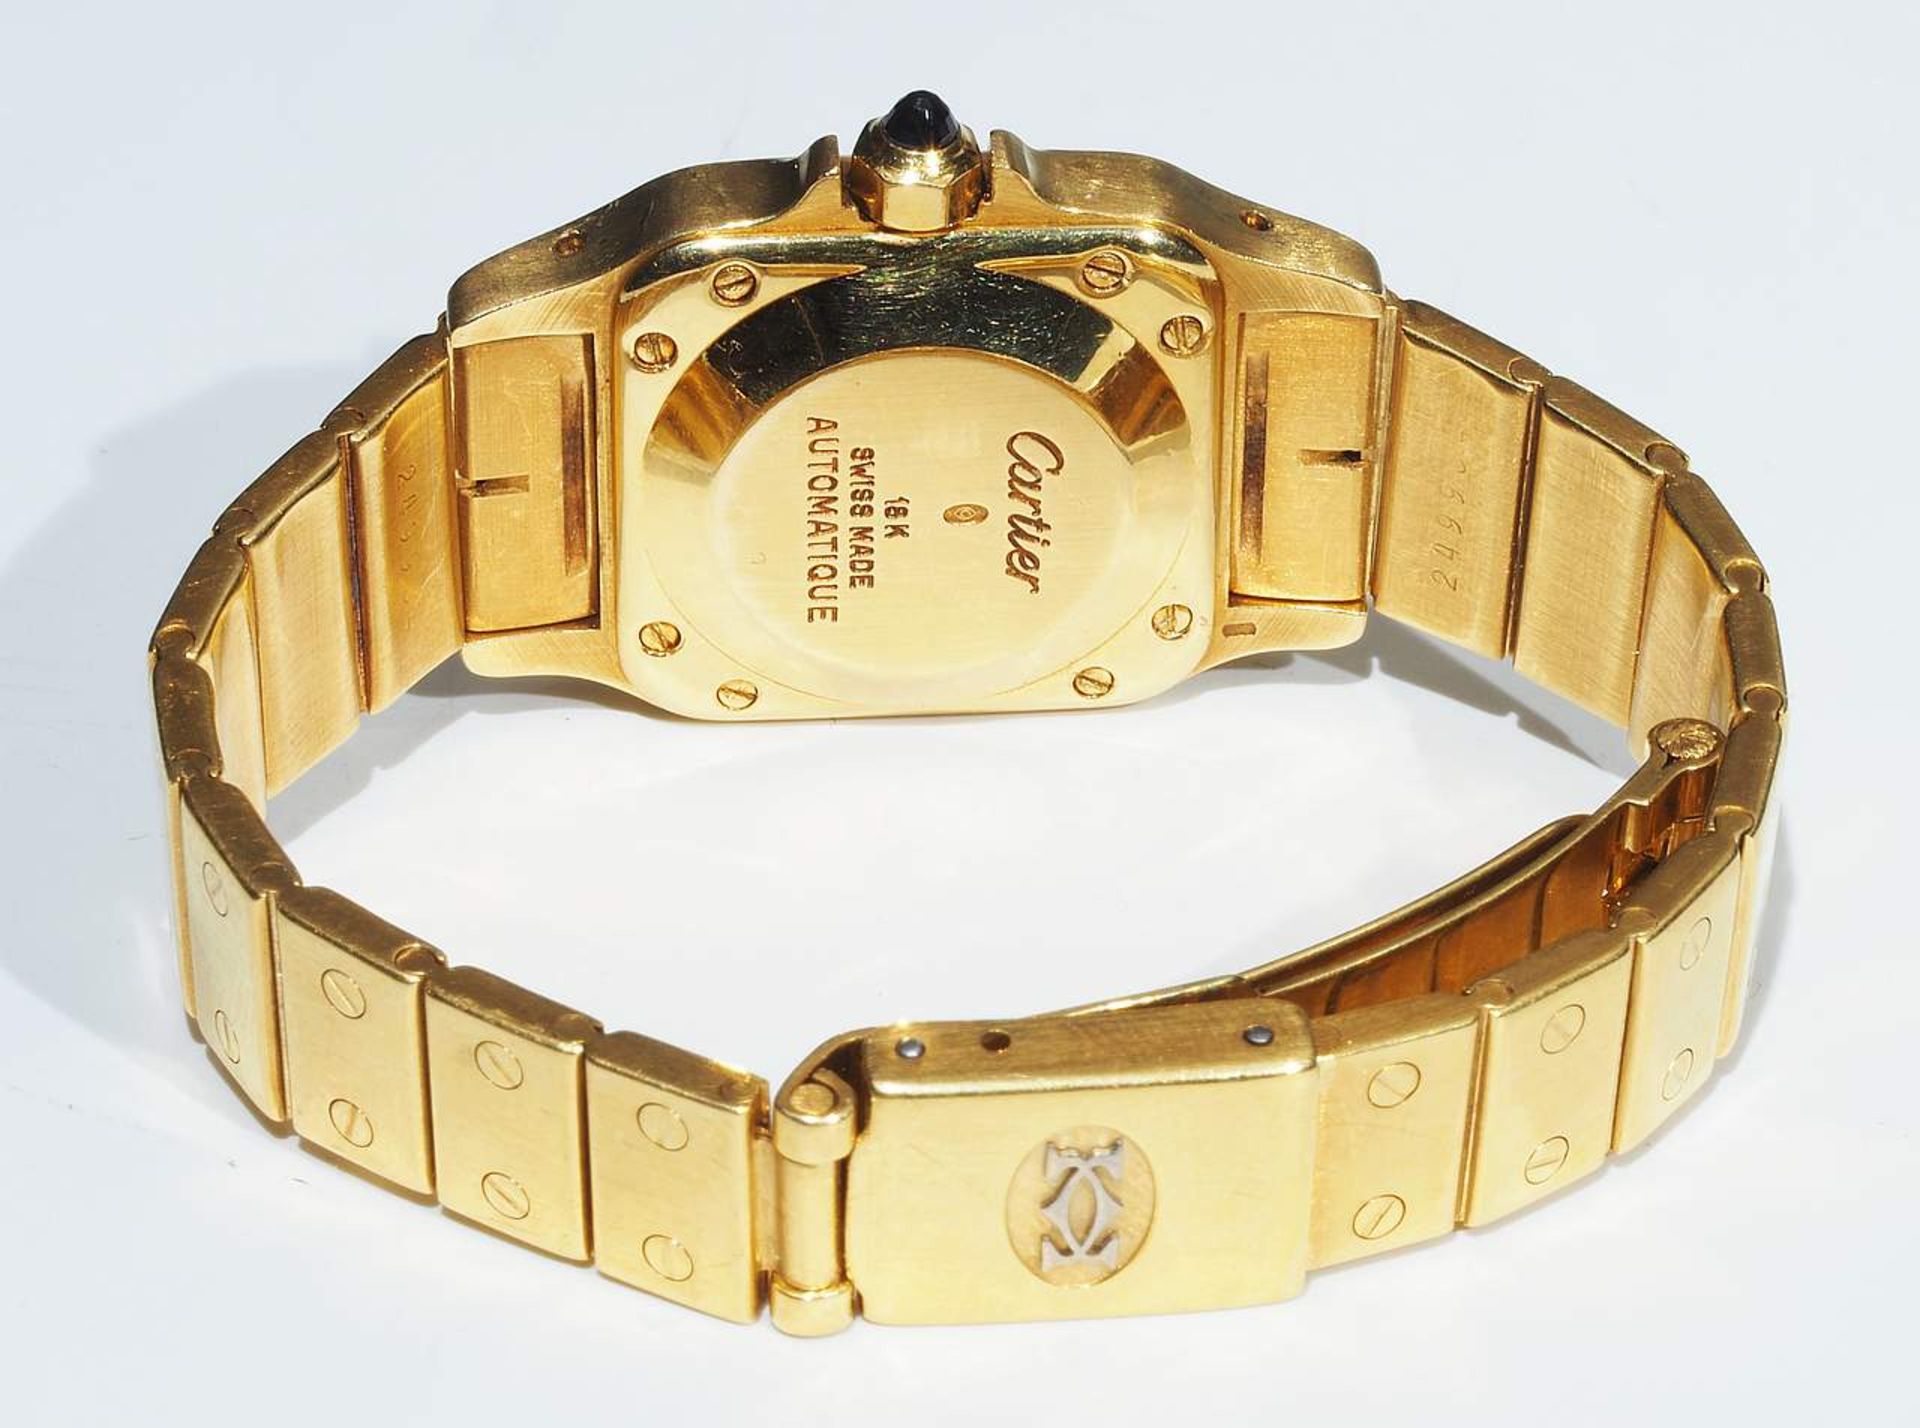 Original Armbanduhr CARTIER SANTOS - mittlere Größe. - Image 5 of 9